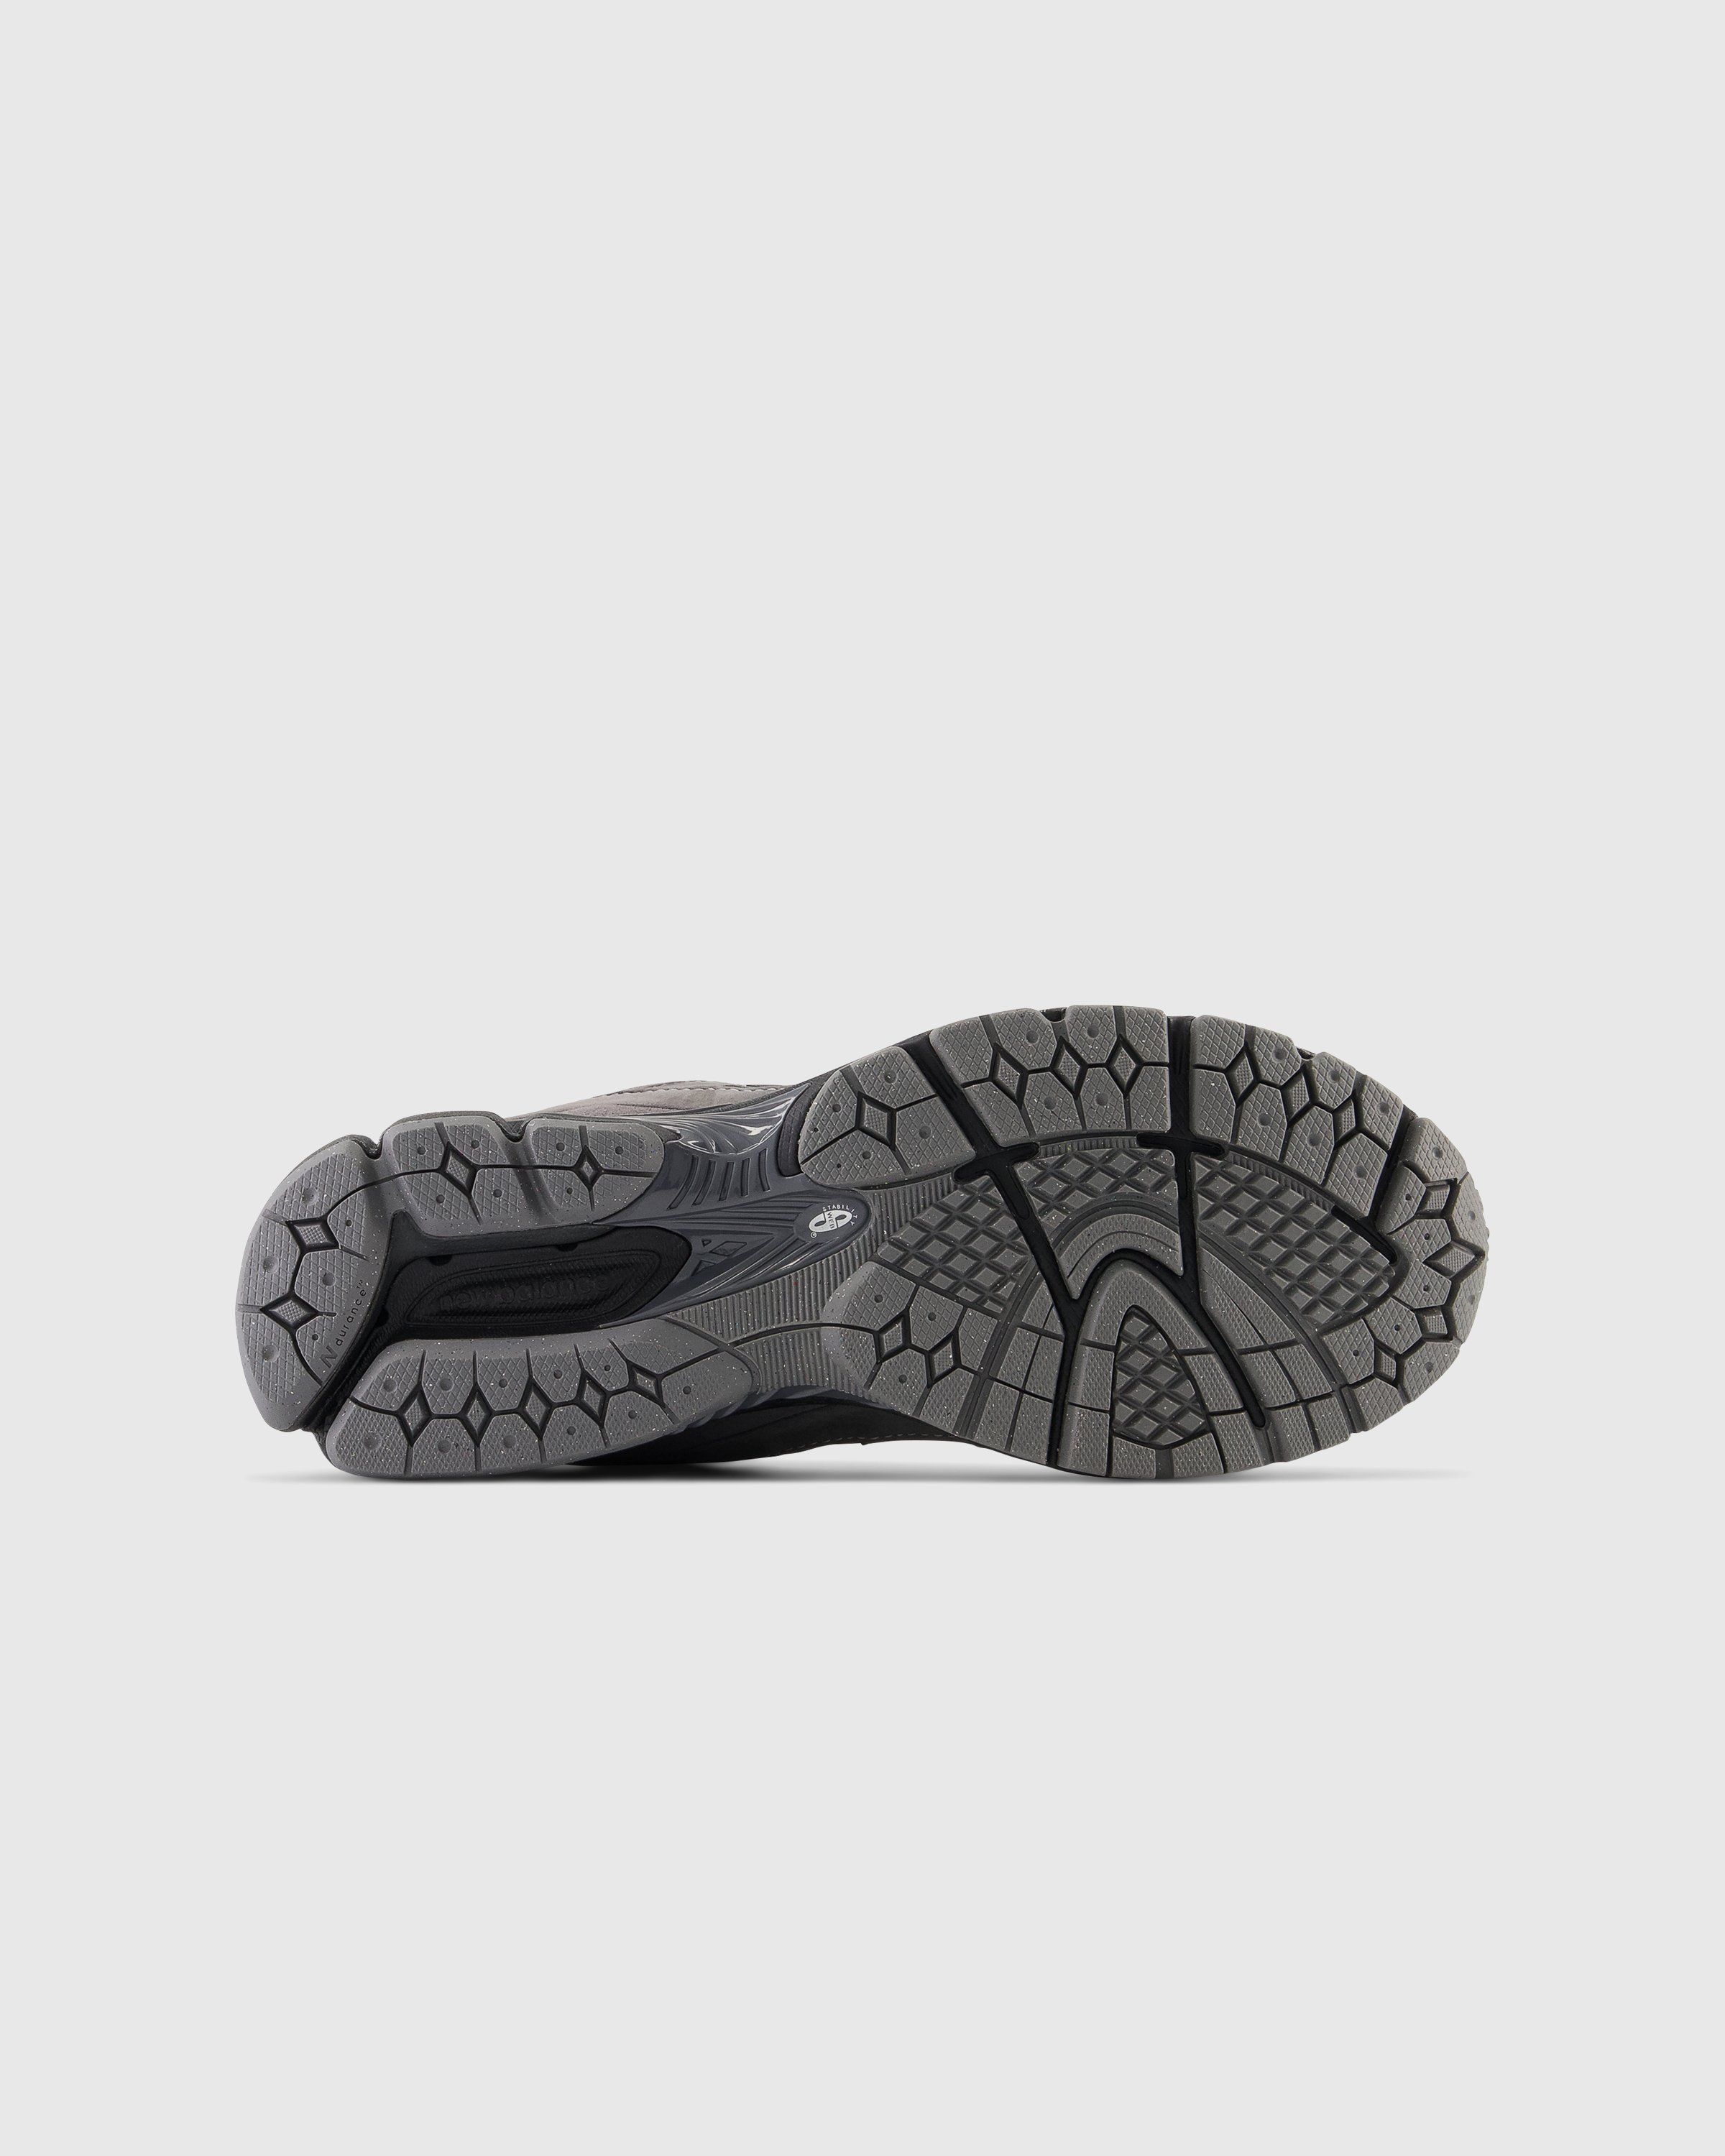 New Balance - M2002REH Castlerock - Footwear - Grey - Image 6